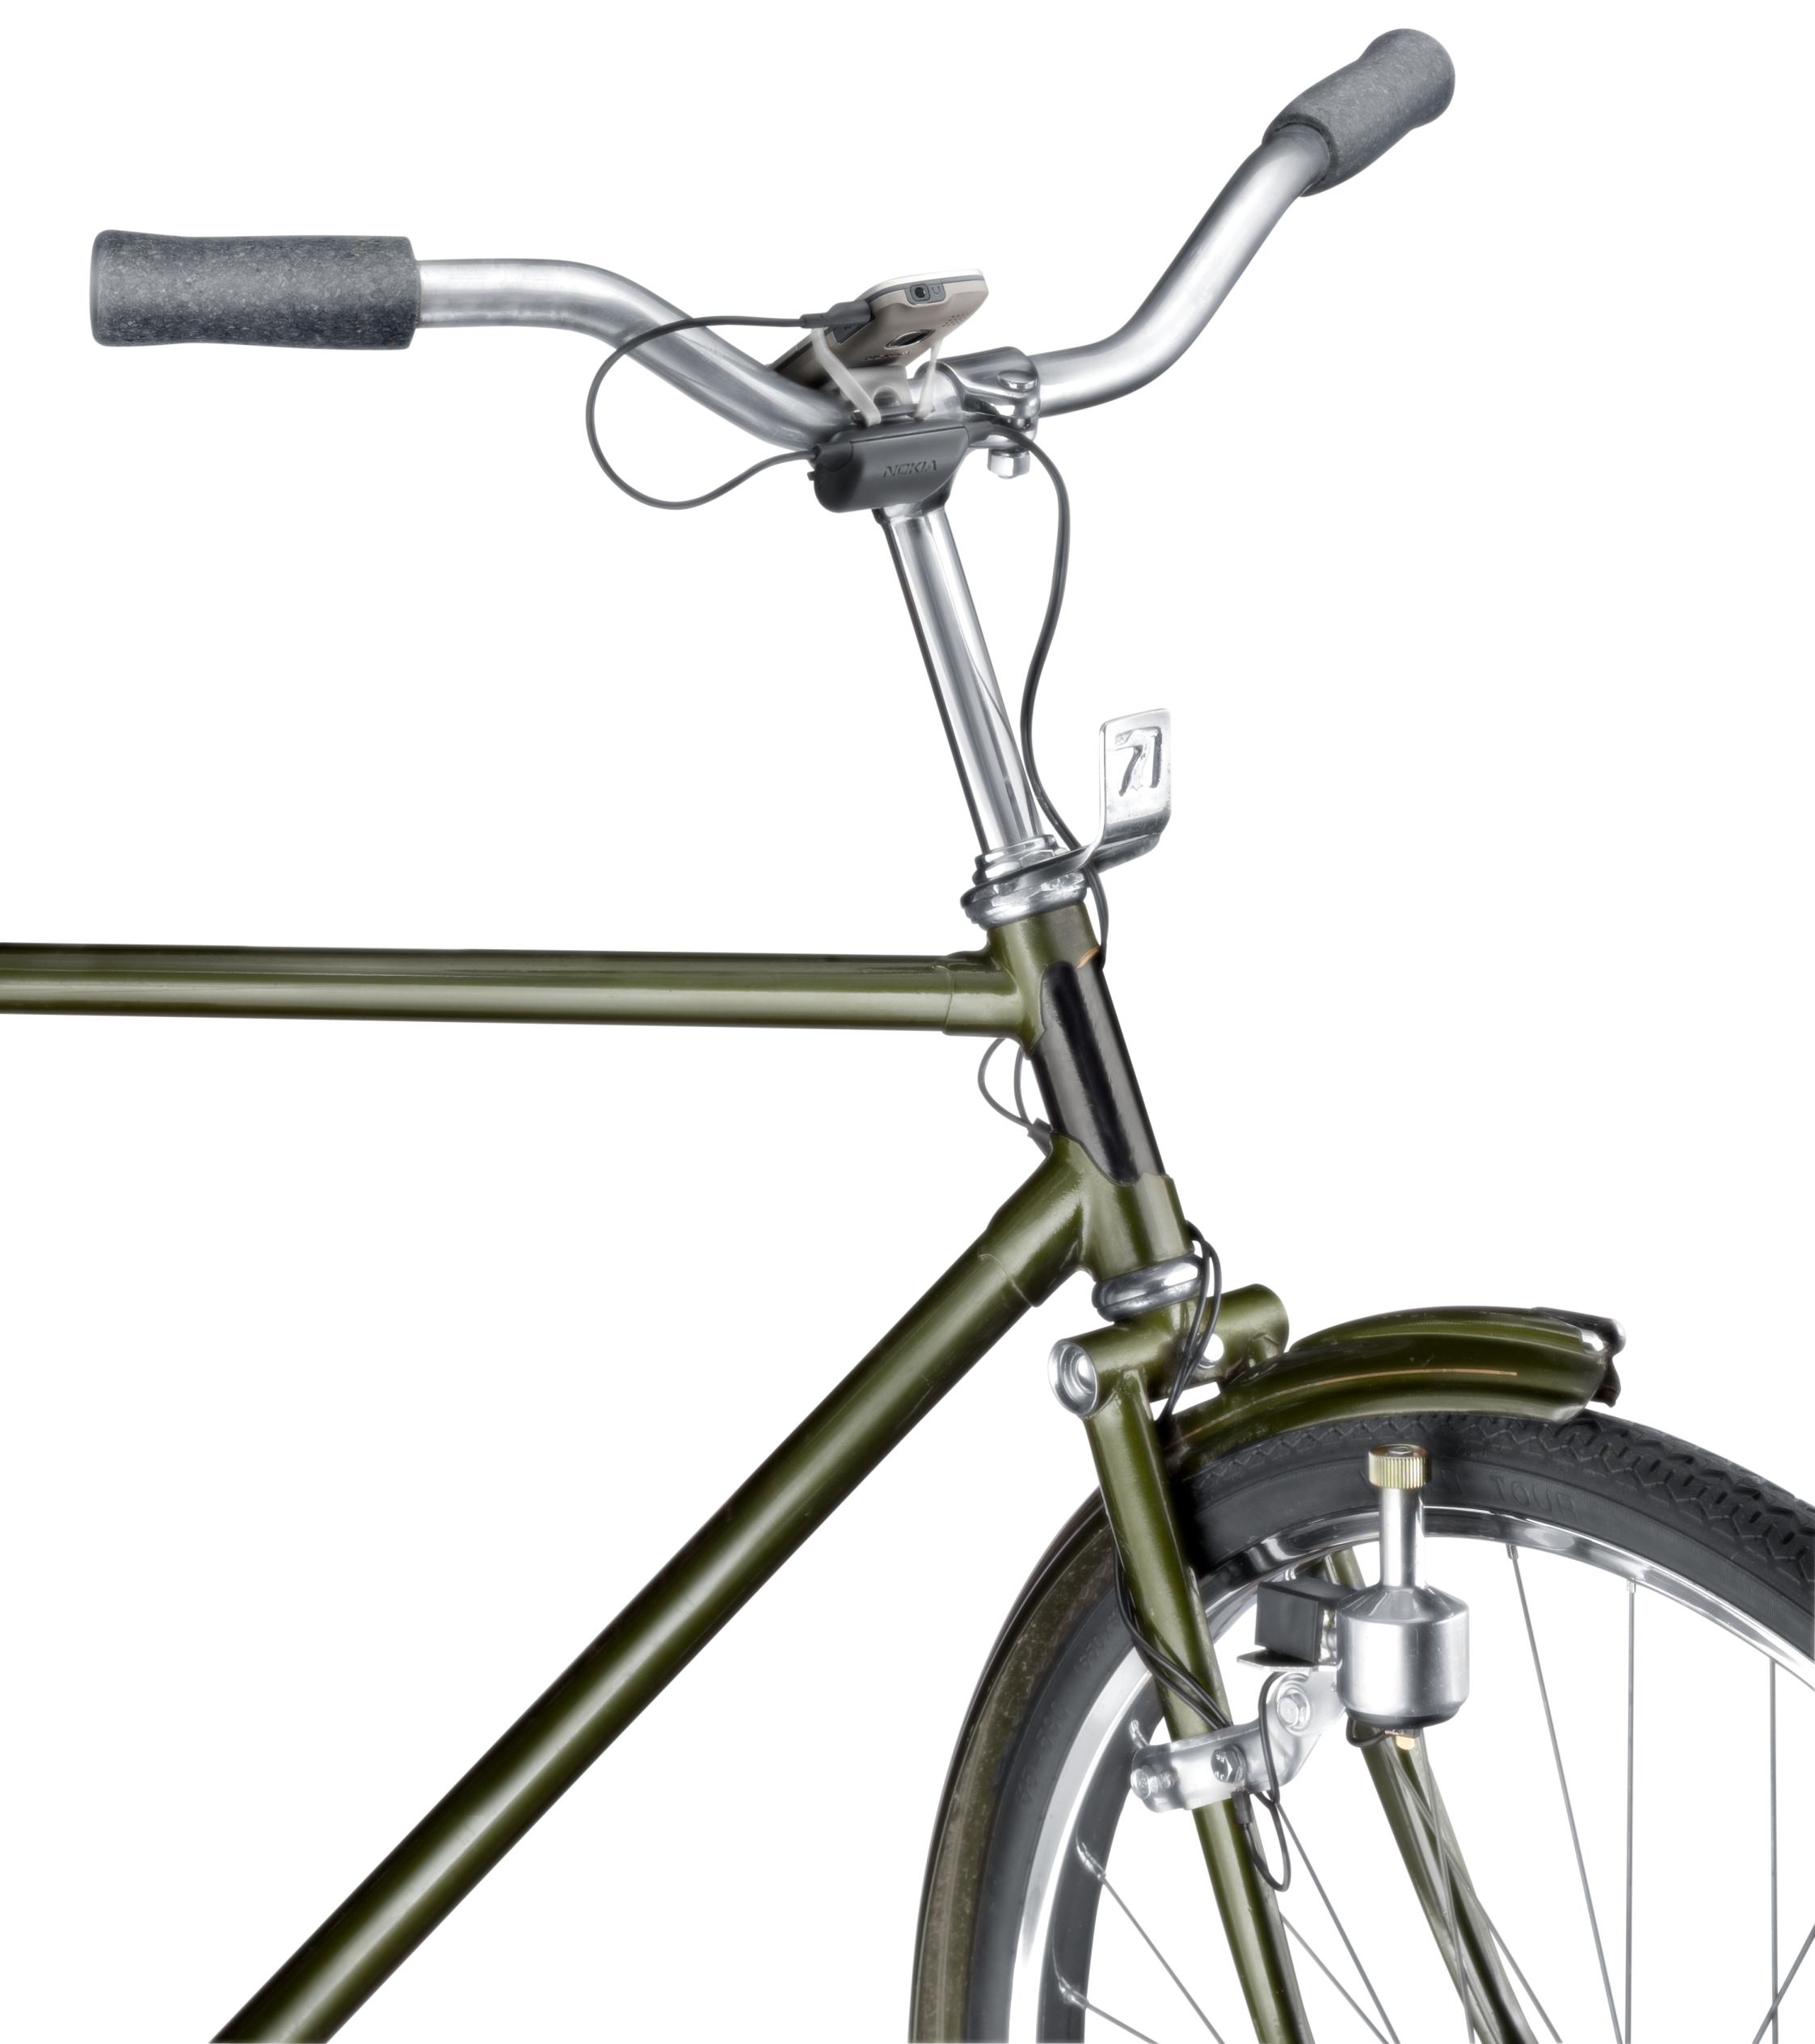 Nokia_Bicycle_Charger_Kit02